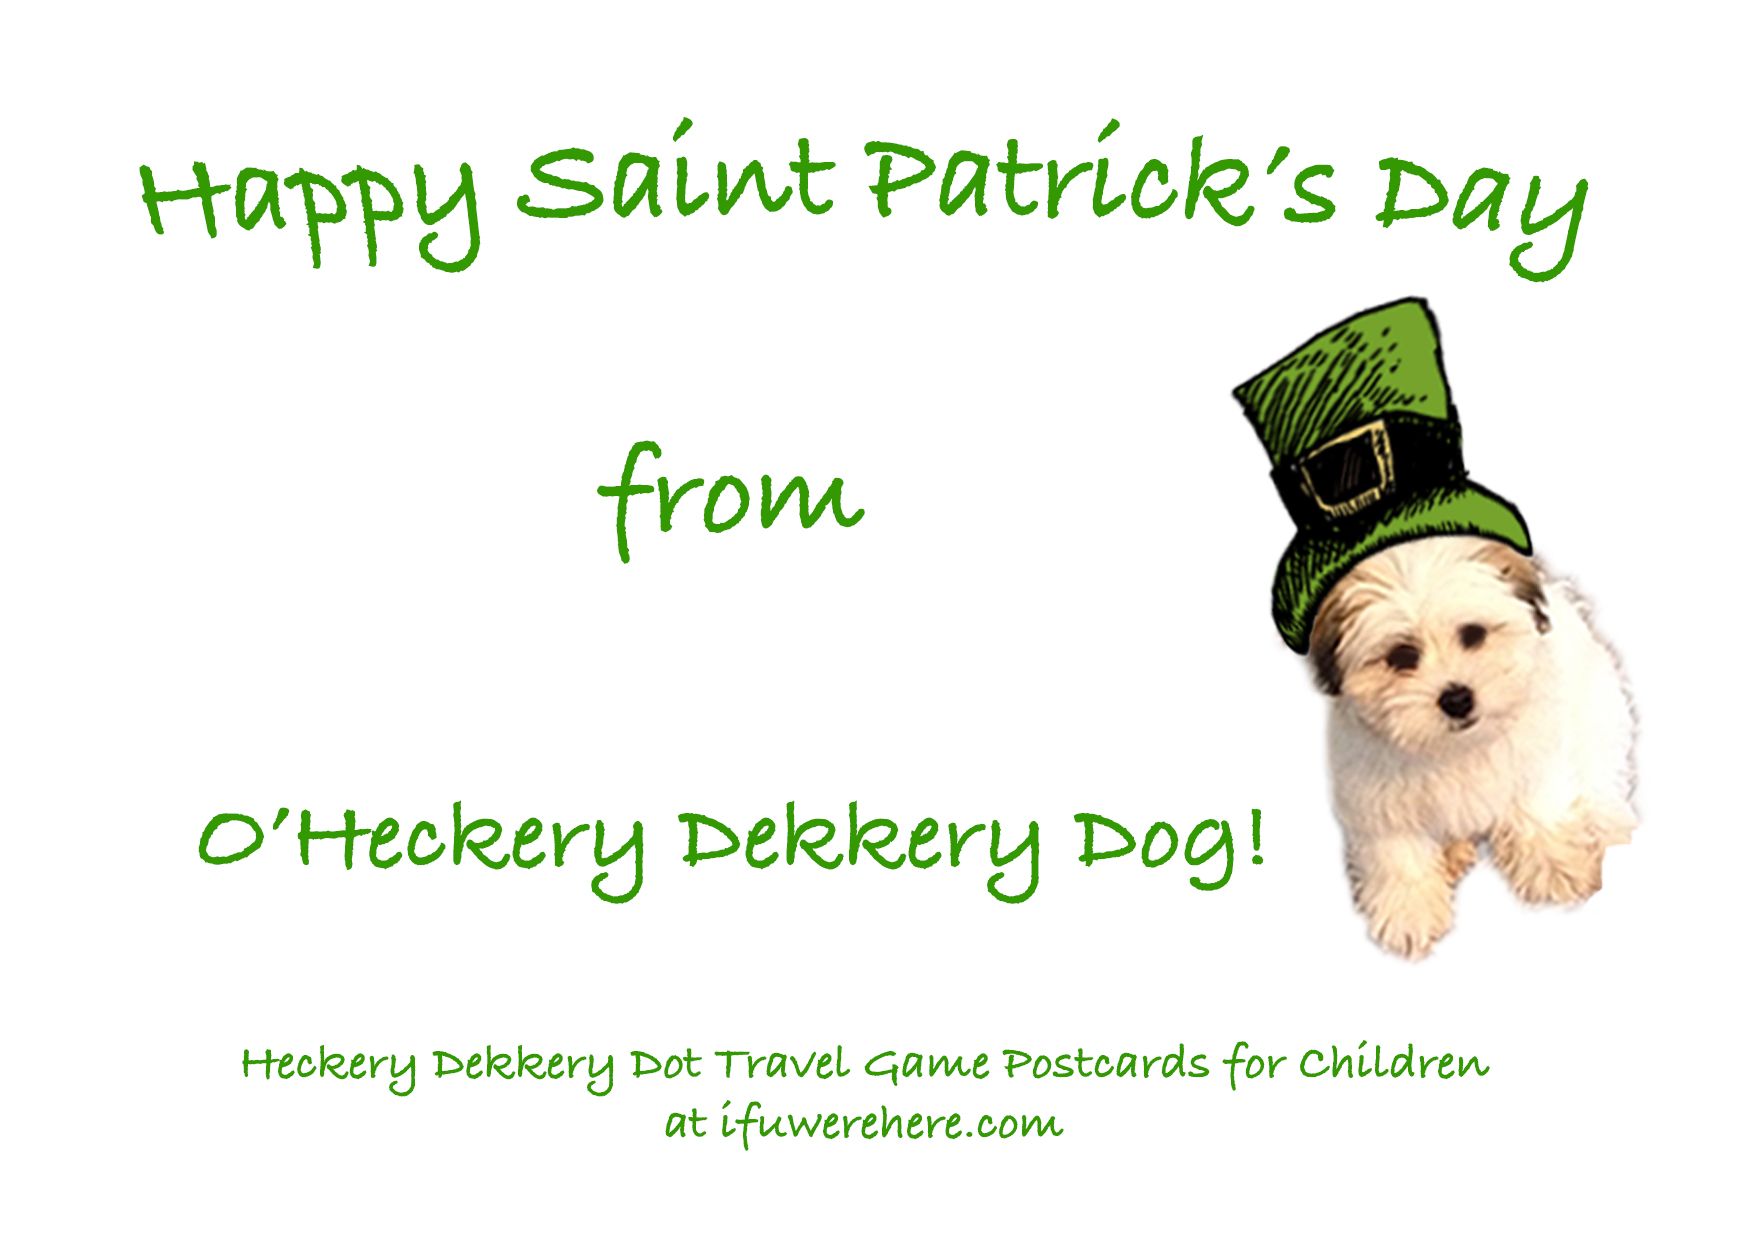 Saint Patrick's Day!